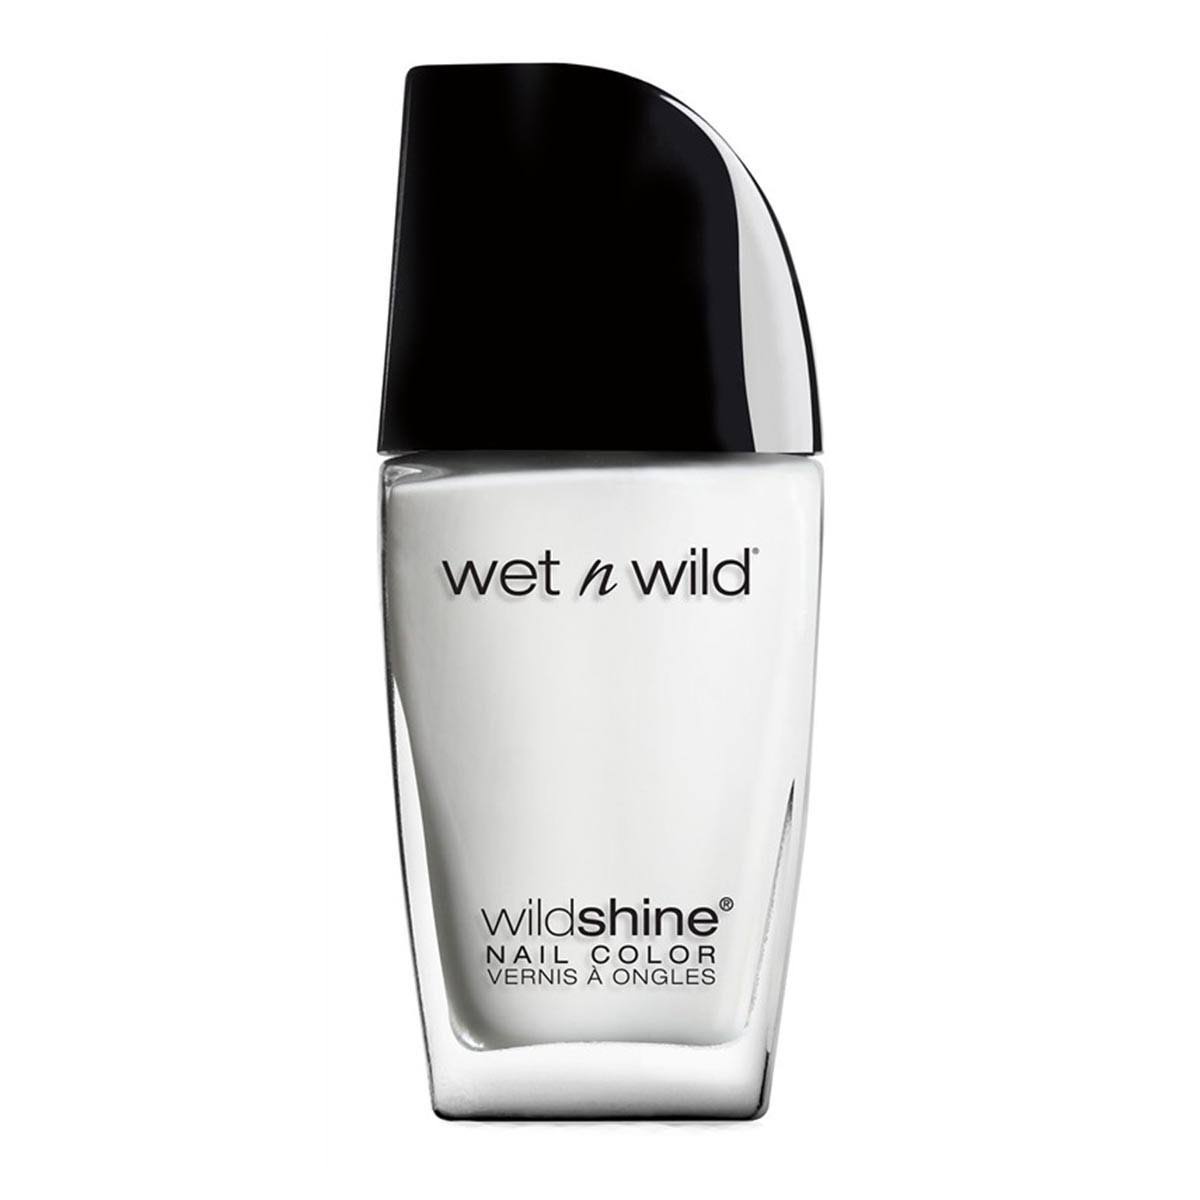 Wet N Wild Wildshine Nail Color French White Creme